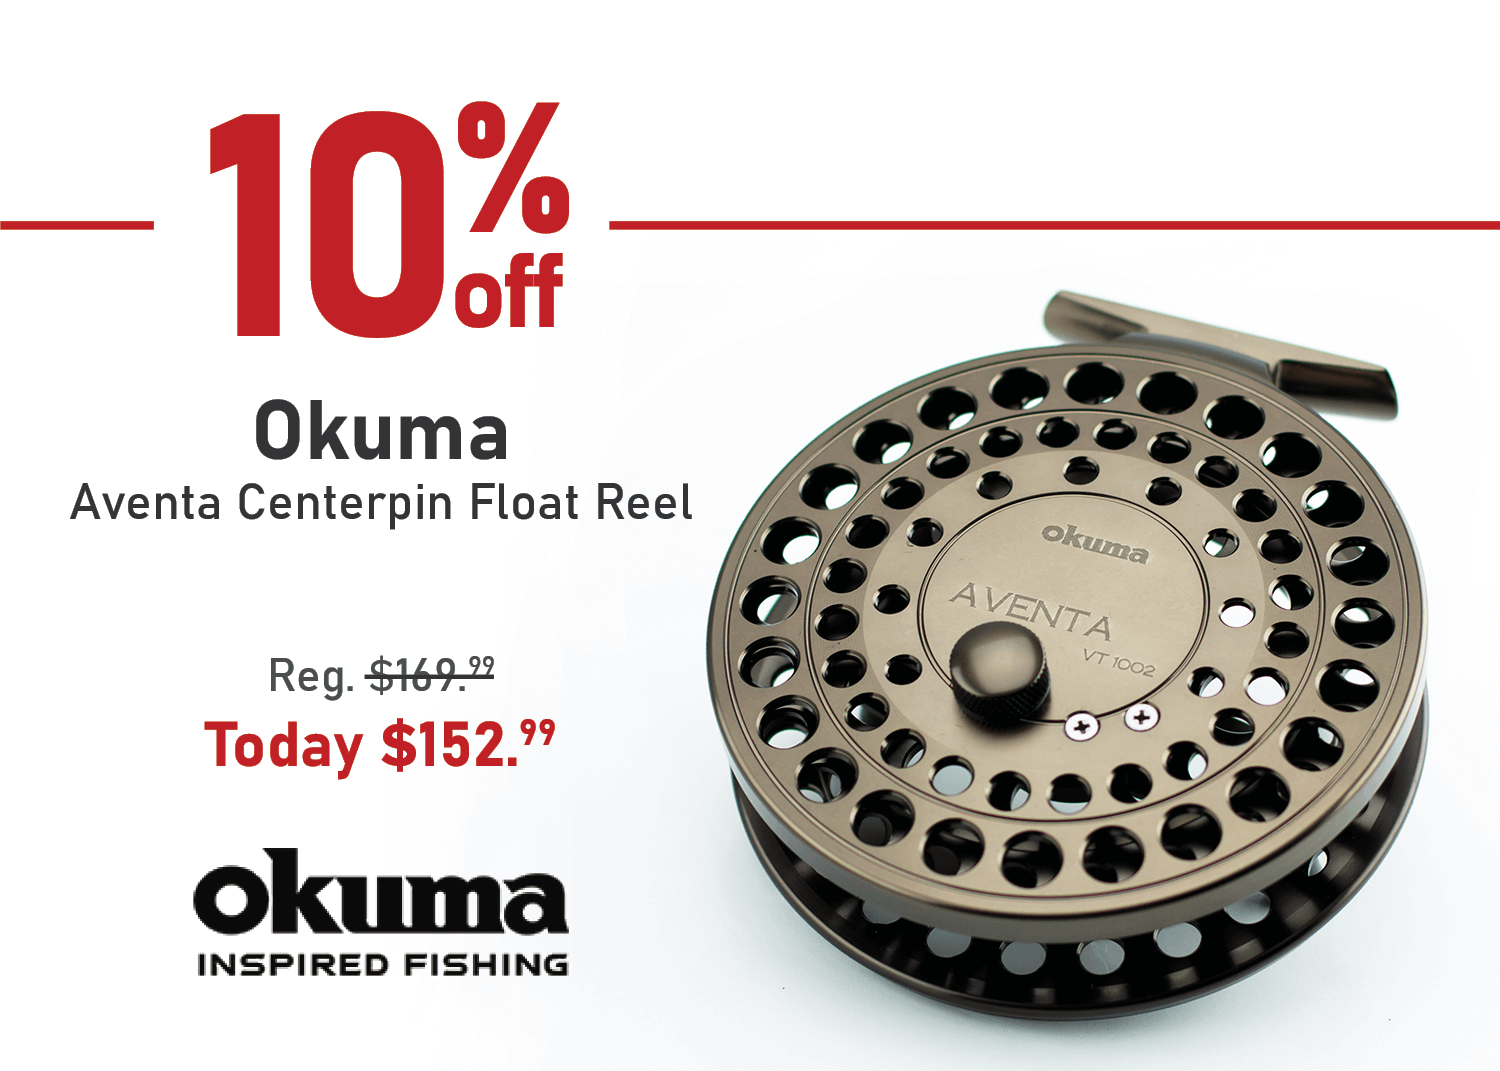 Take 10% off the Okuma Aventa Centerpin Float Reel